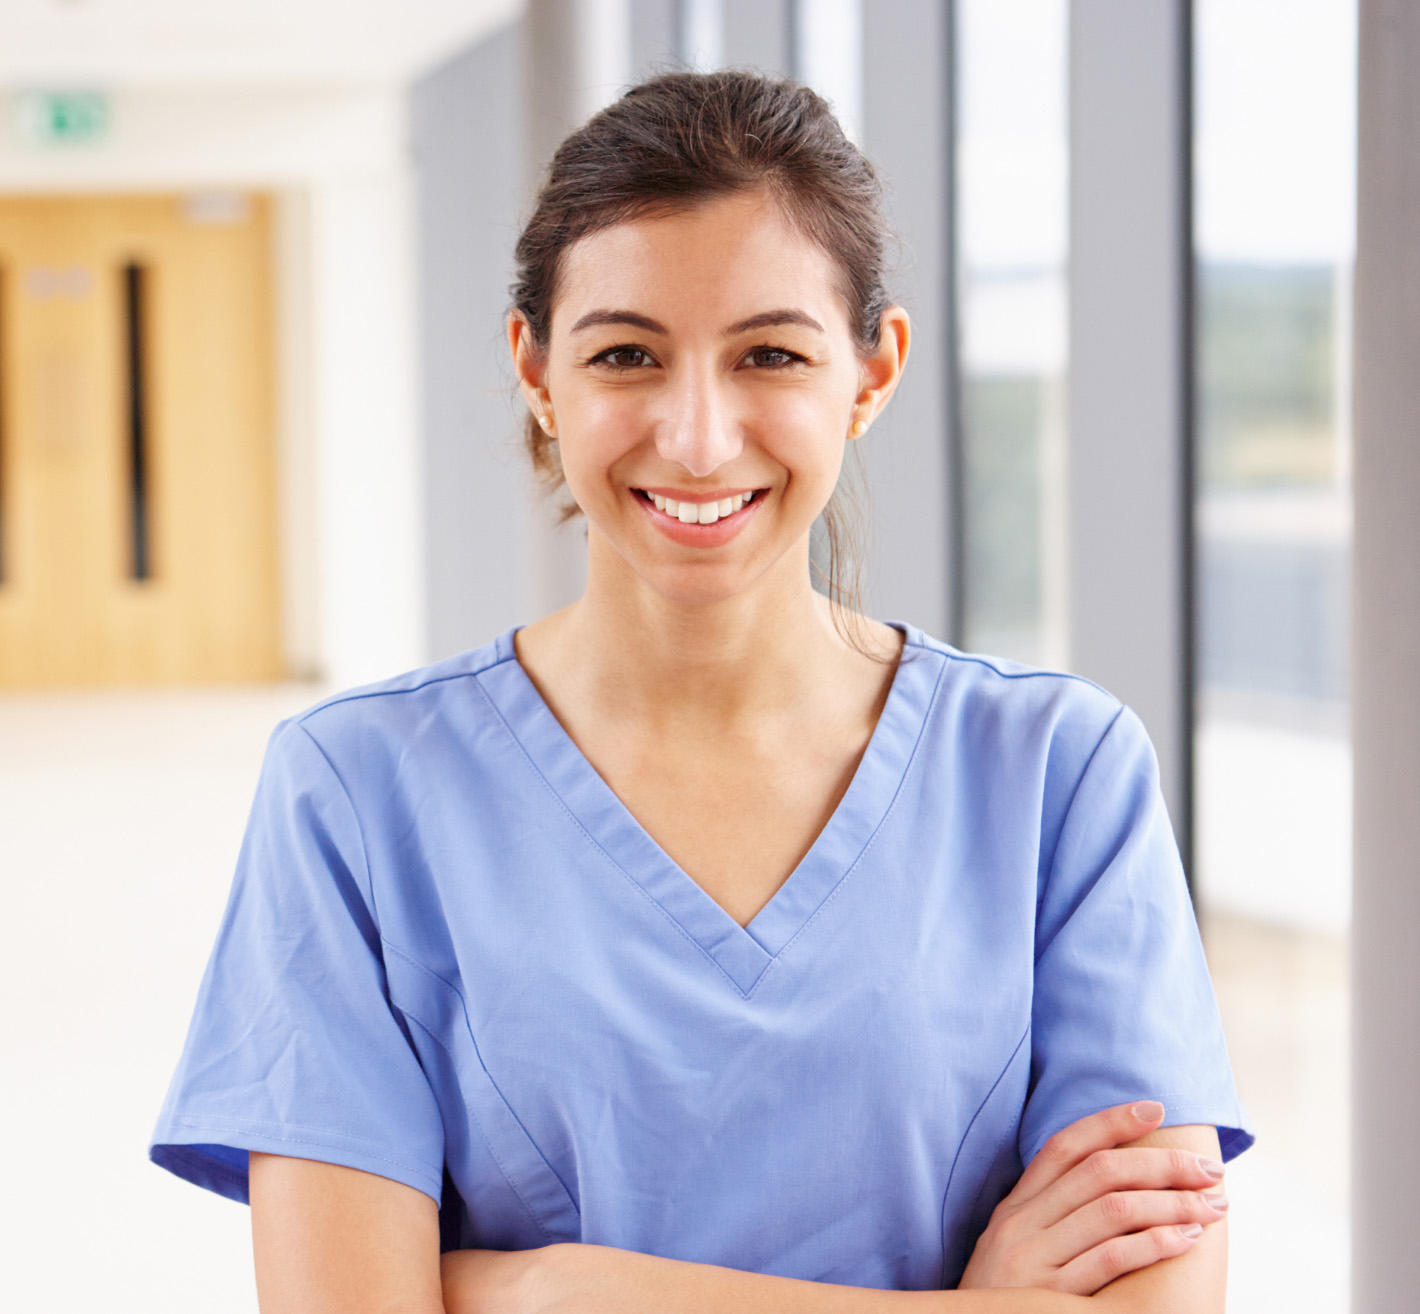 Nurse standing in hospital smiling